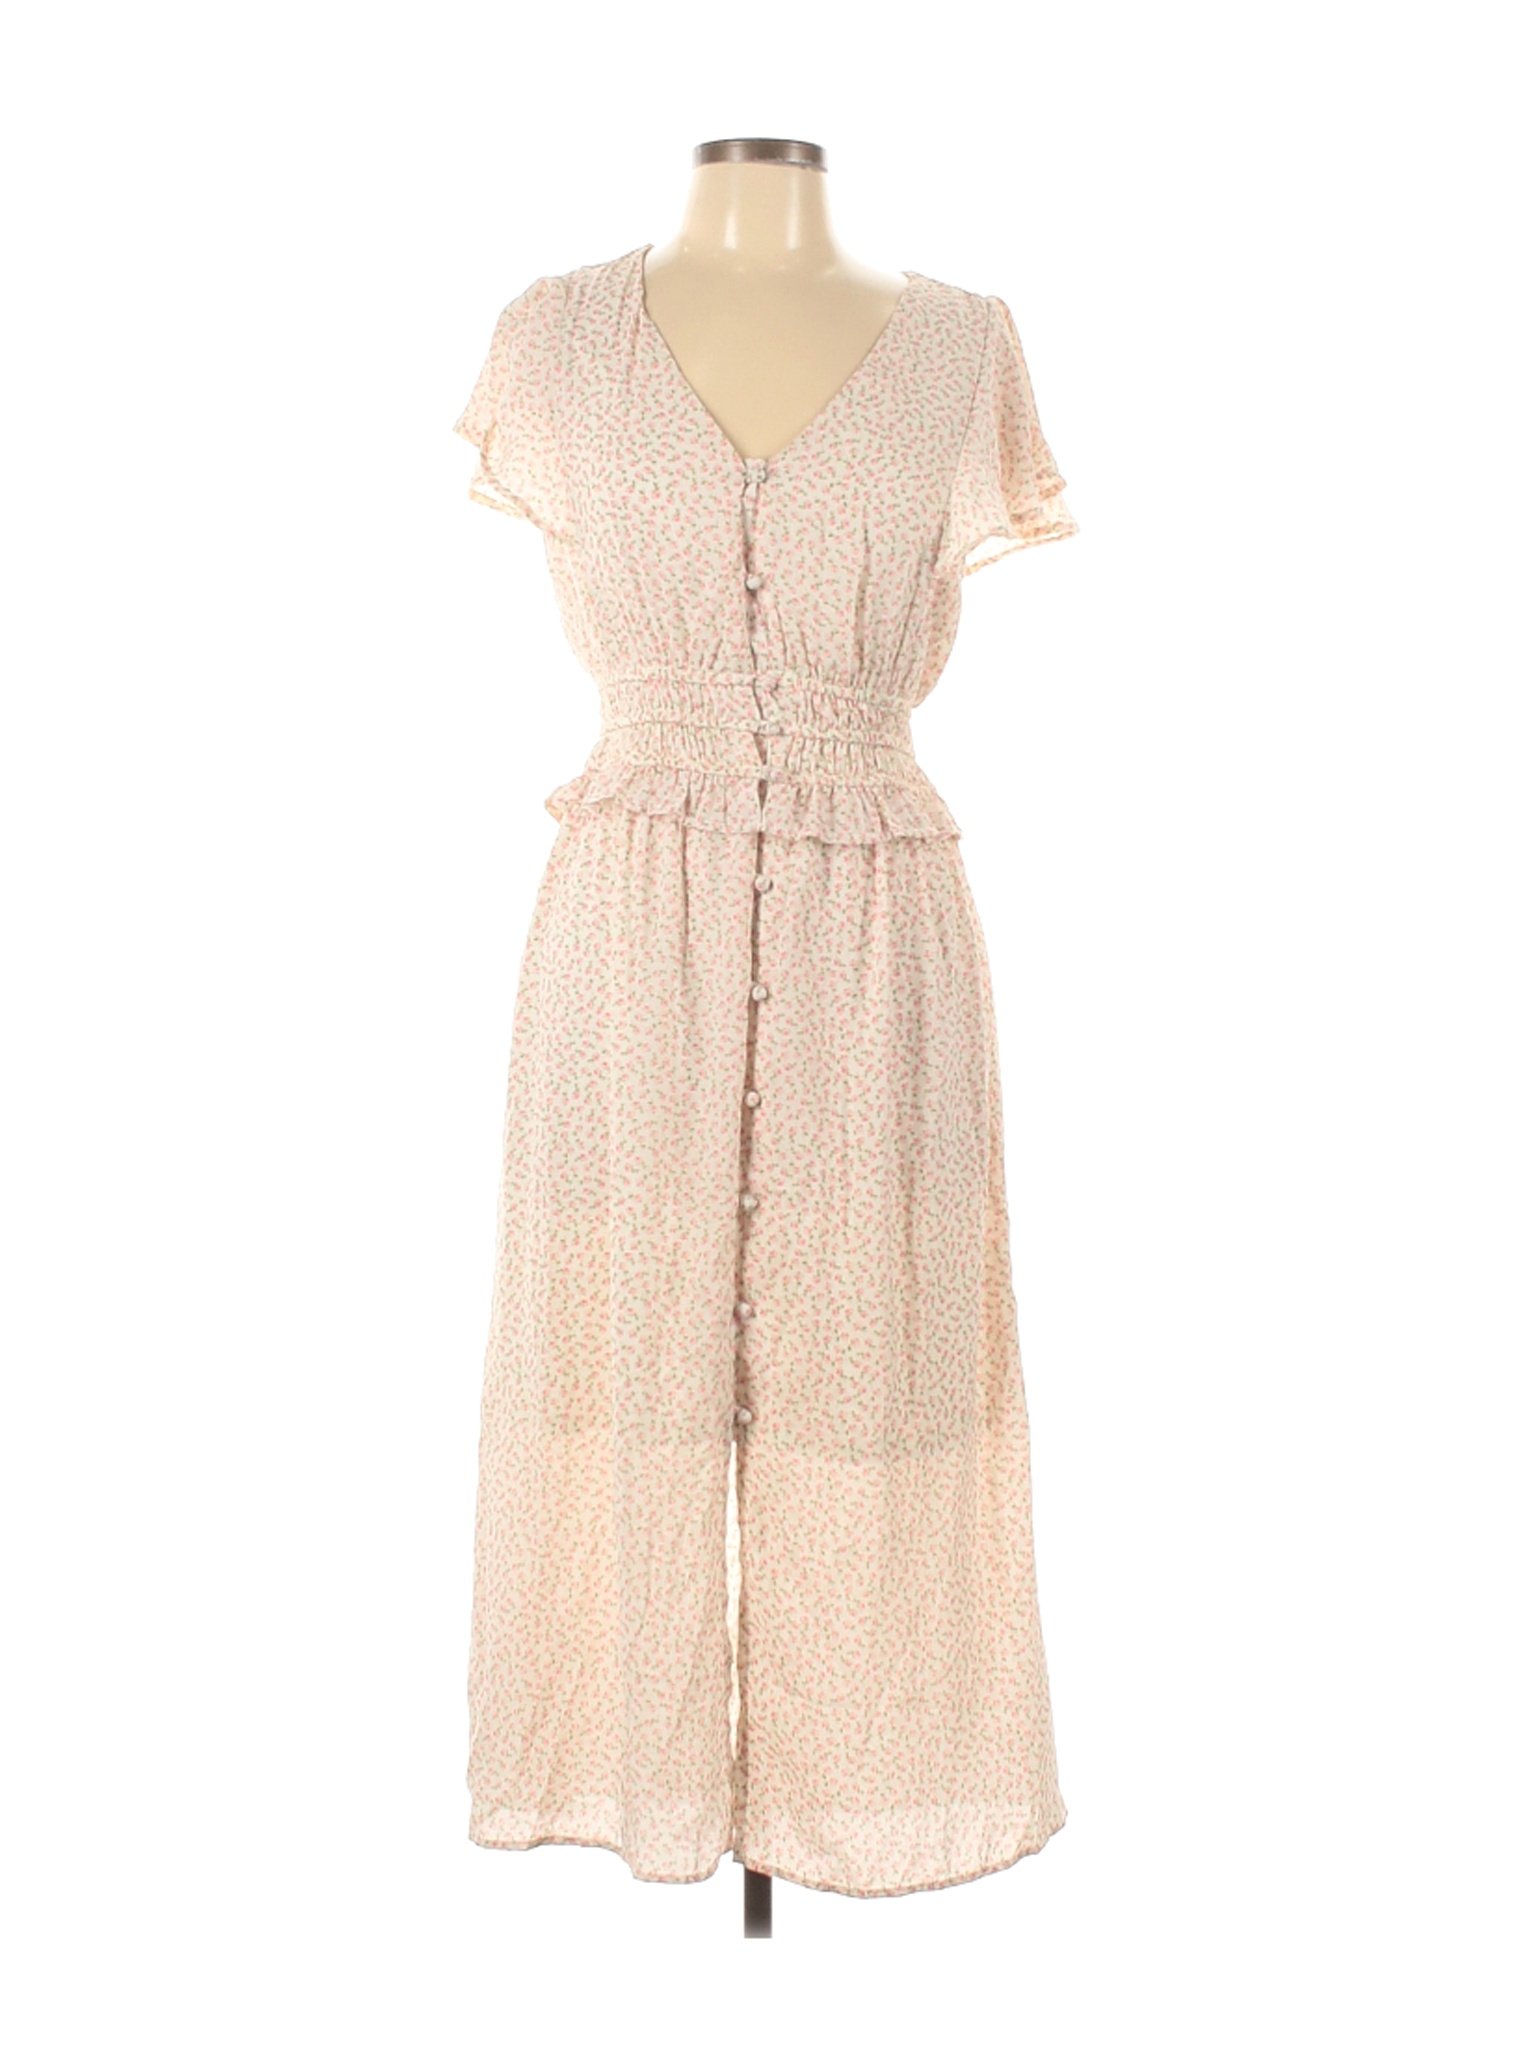 Sienna Sky Women Brown Casual Dress L | eBay